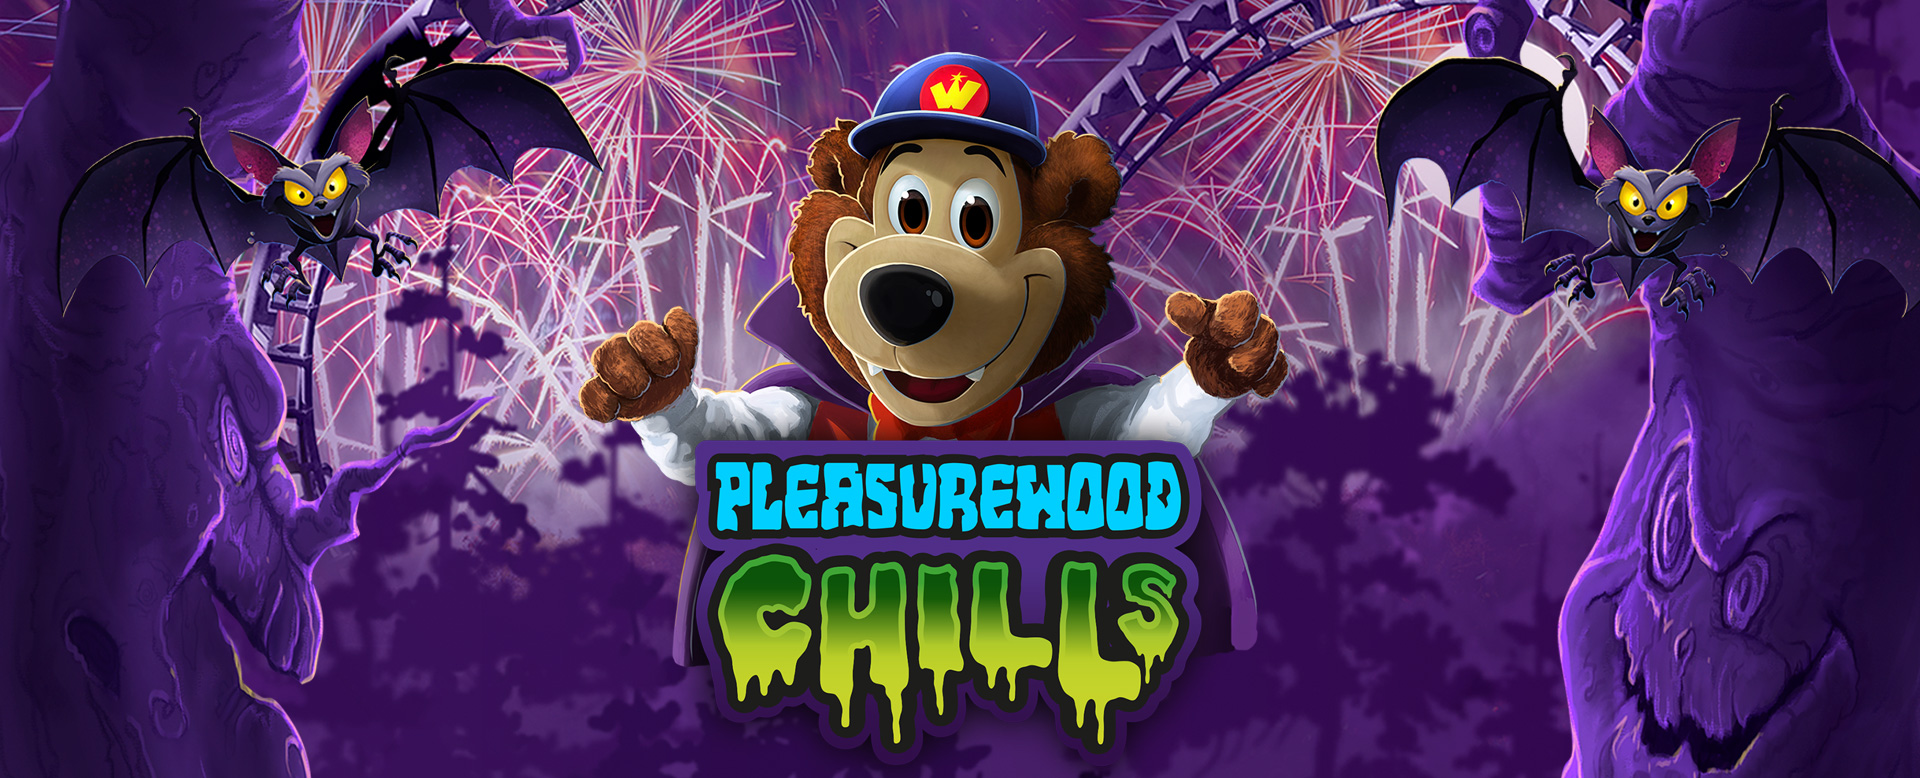 Pleasurewood Chills theme park halloween half term suffolk